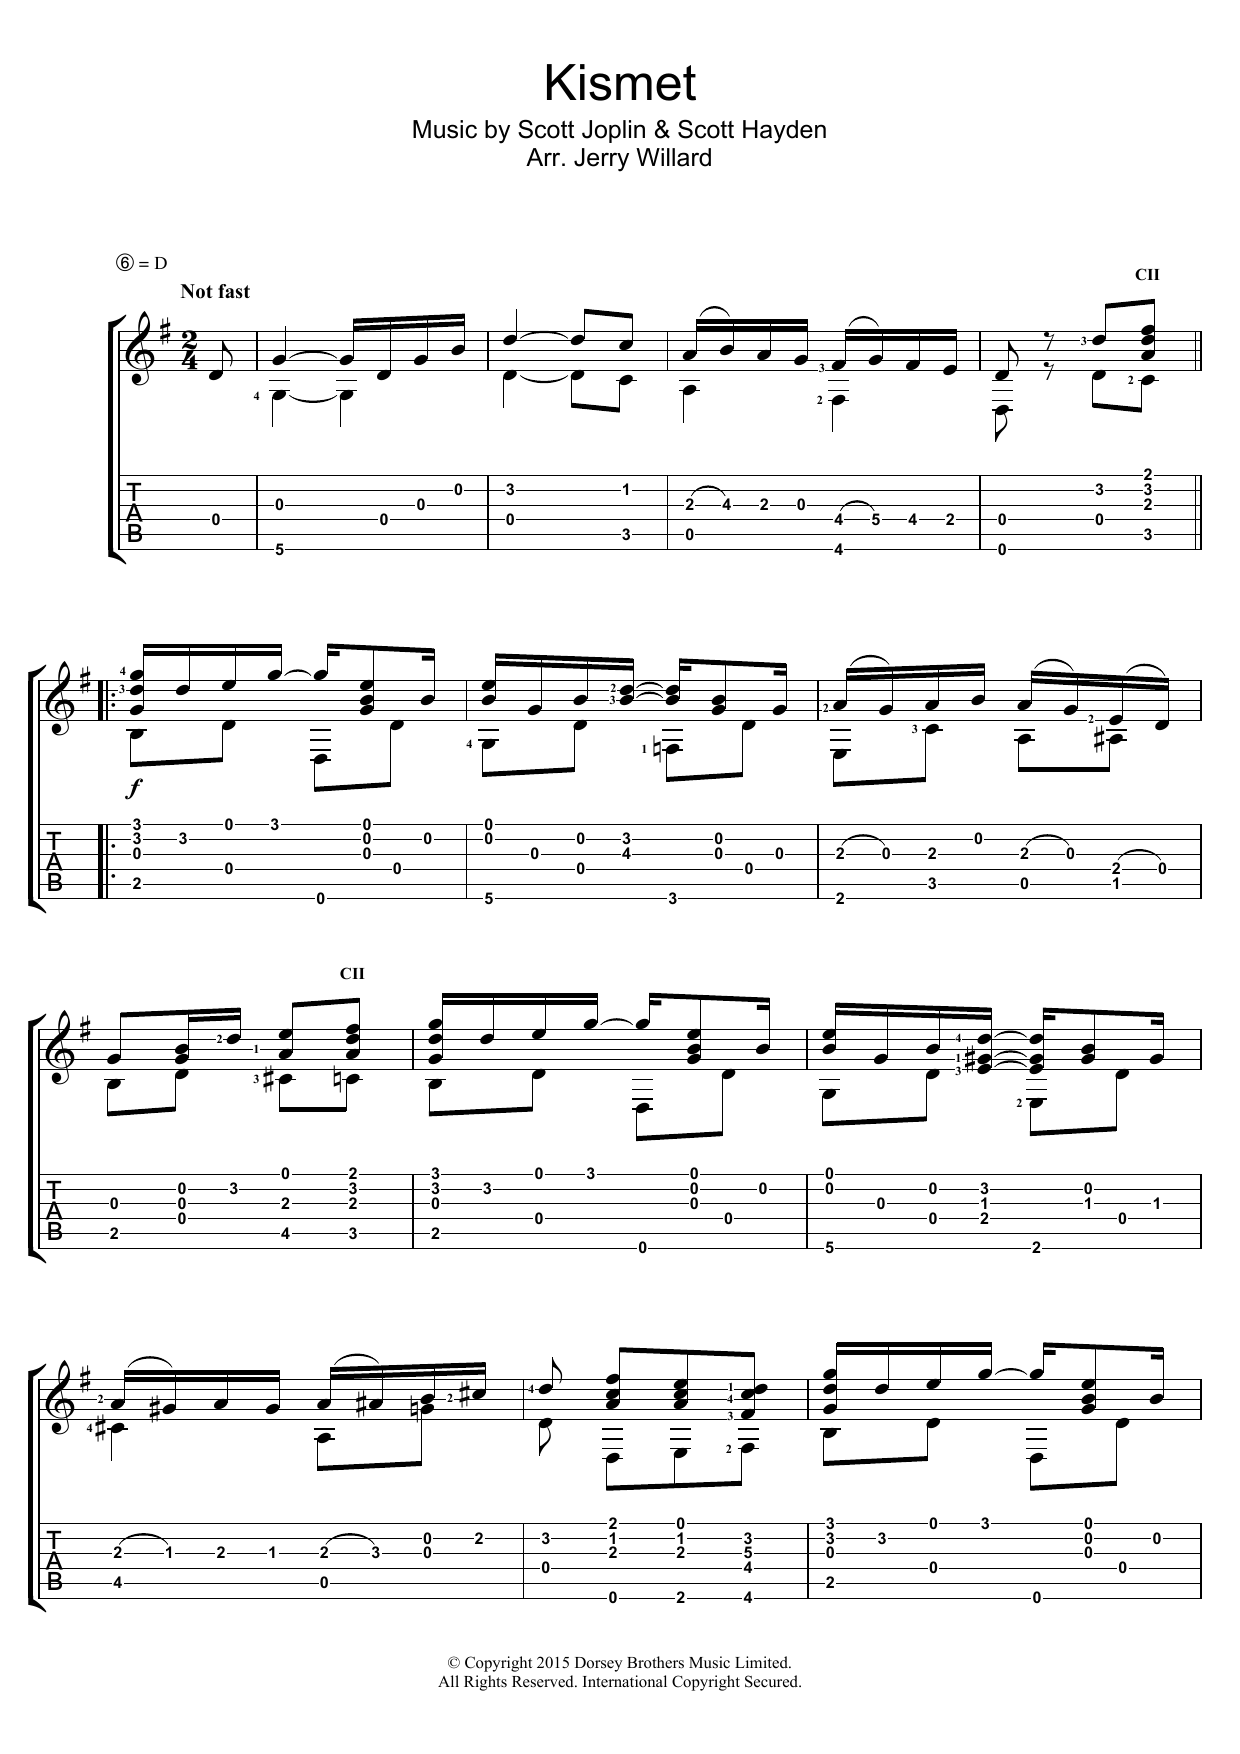 Scott Joplin Kismet Sheet Music Notes & Chords for Guitar Tab - Download or Print PDF